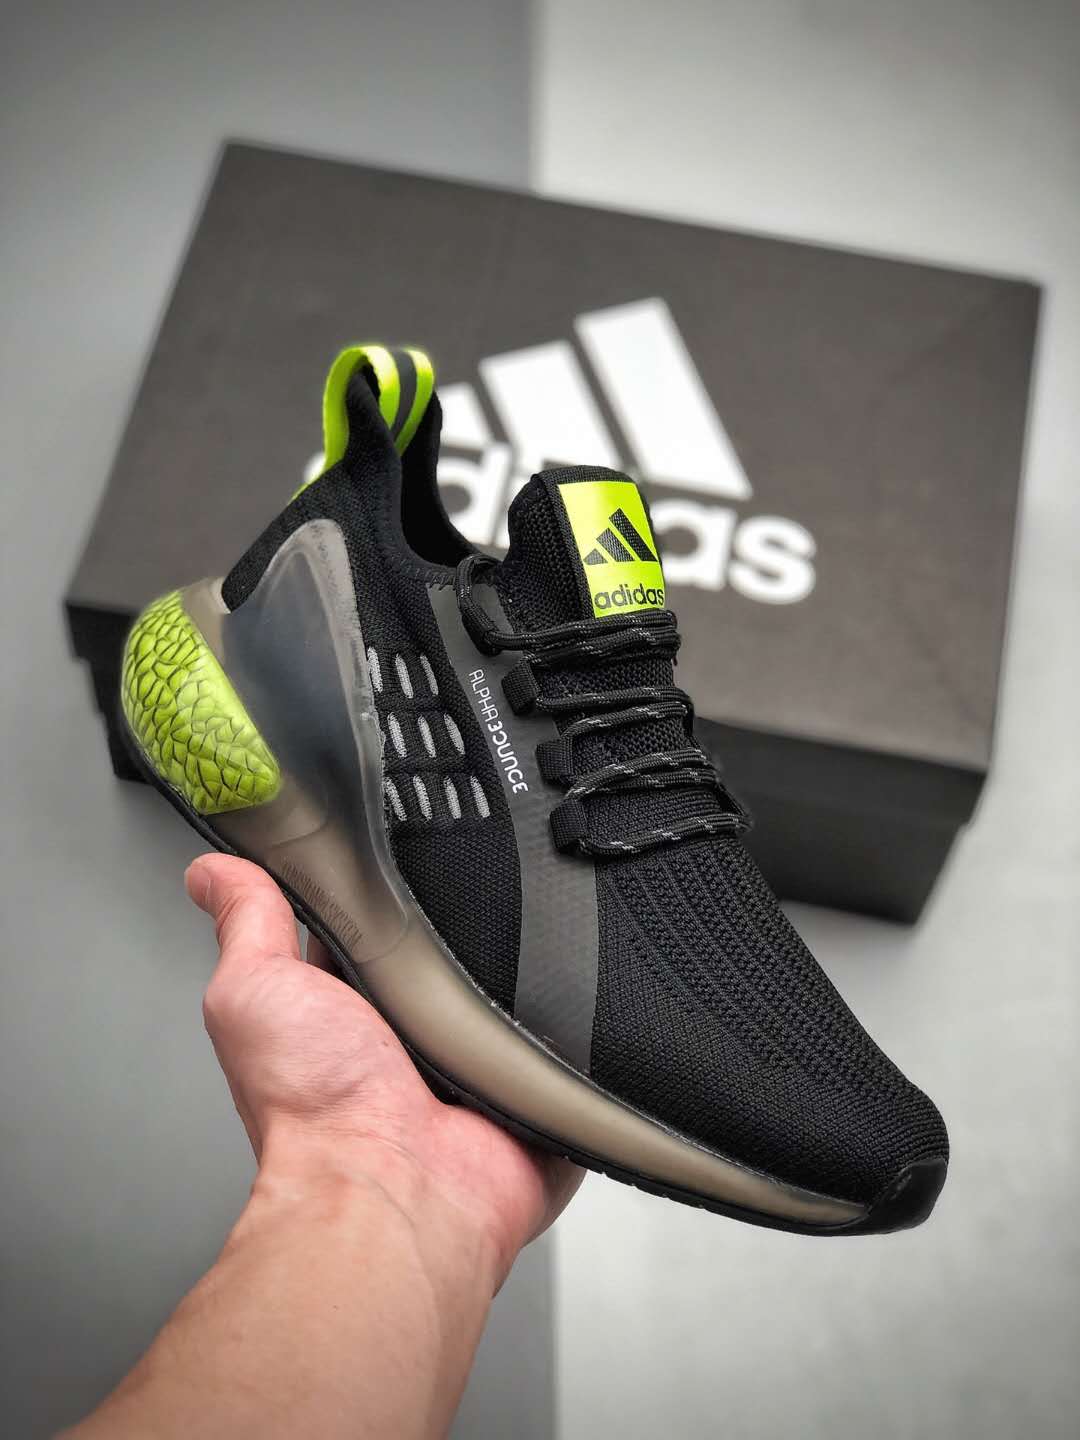 Adidas AlphaBounce Instinct Black Green Shoes | CG3402 | Performance footwear